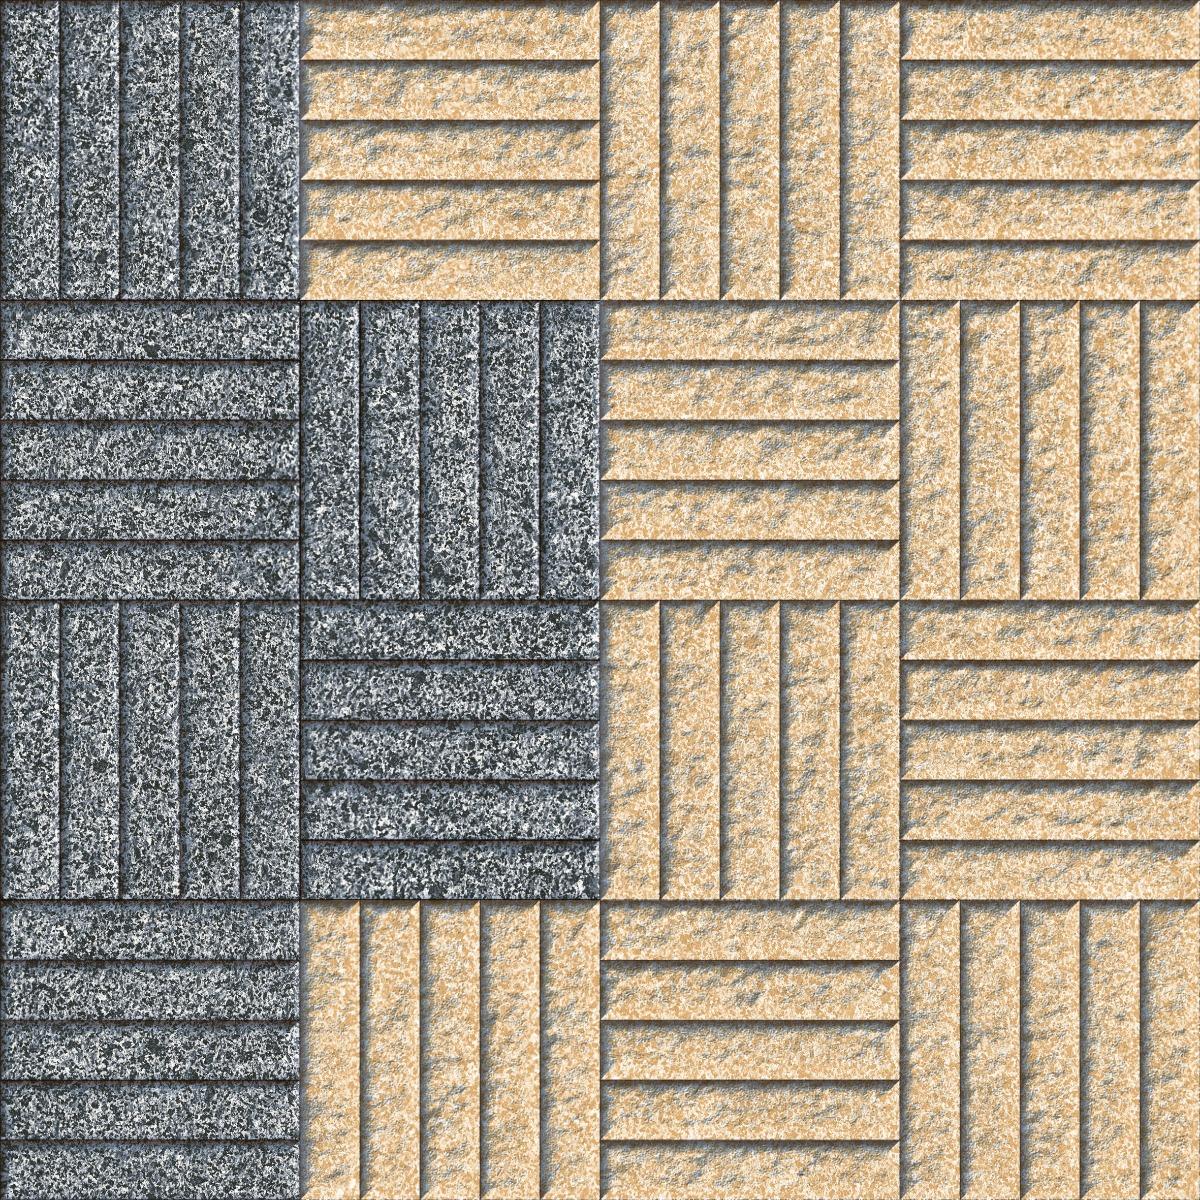 Office Tiles for Commercial Tiles, Parking Tiles, Office Tiles, Pathway Tiles, Hospital Tiles, High Traffic Tiles, Bar/Restaurant, Outdoor Area, Porch/Parking